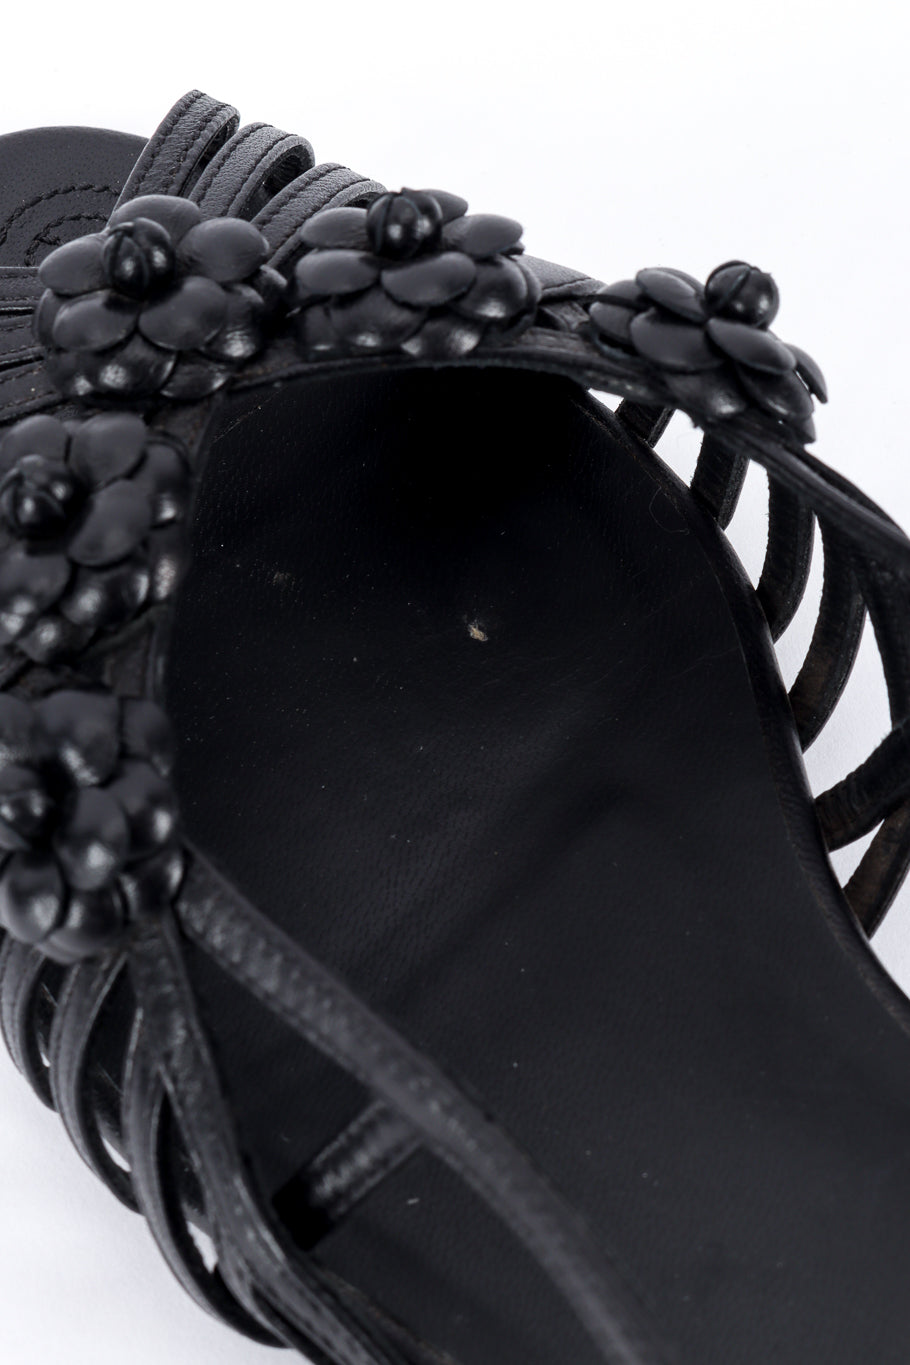 Chanel Camellia Flower Slingback Sandals insole wear closeup @recess la